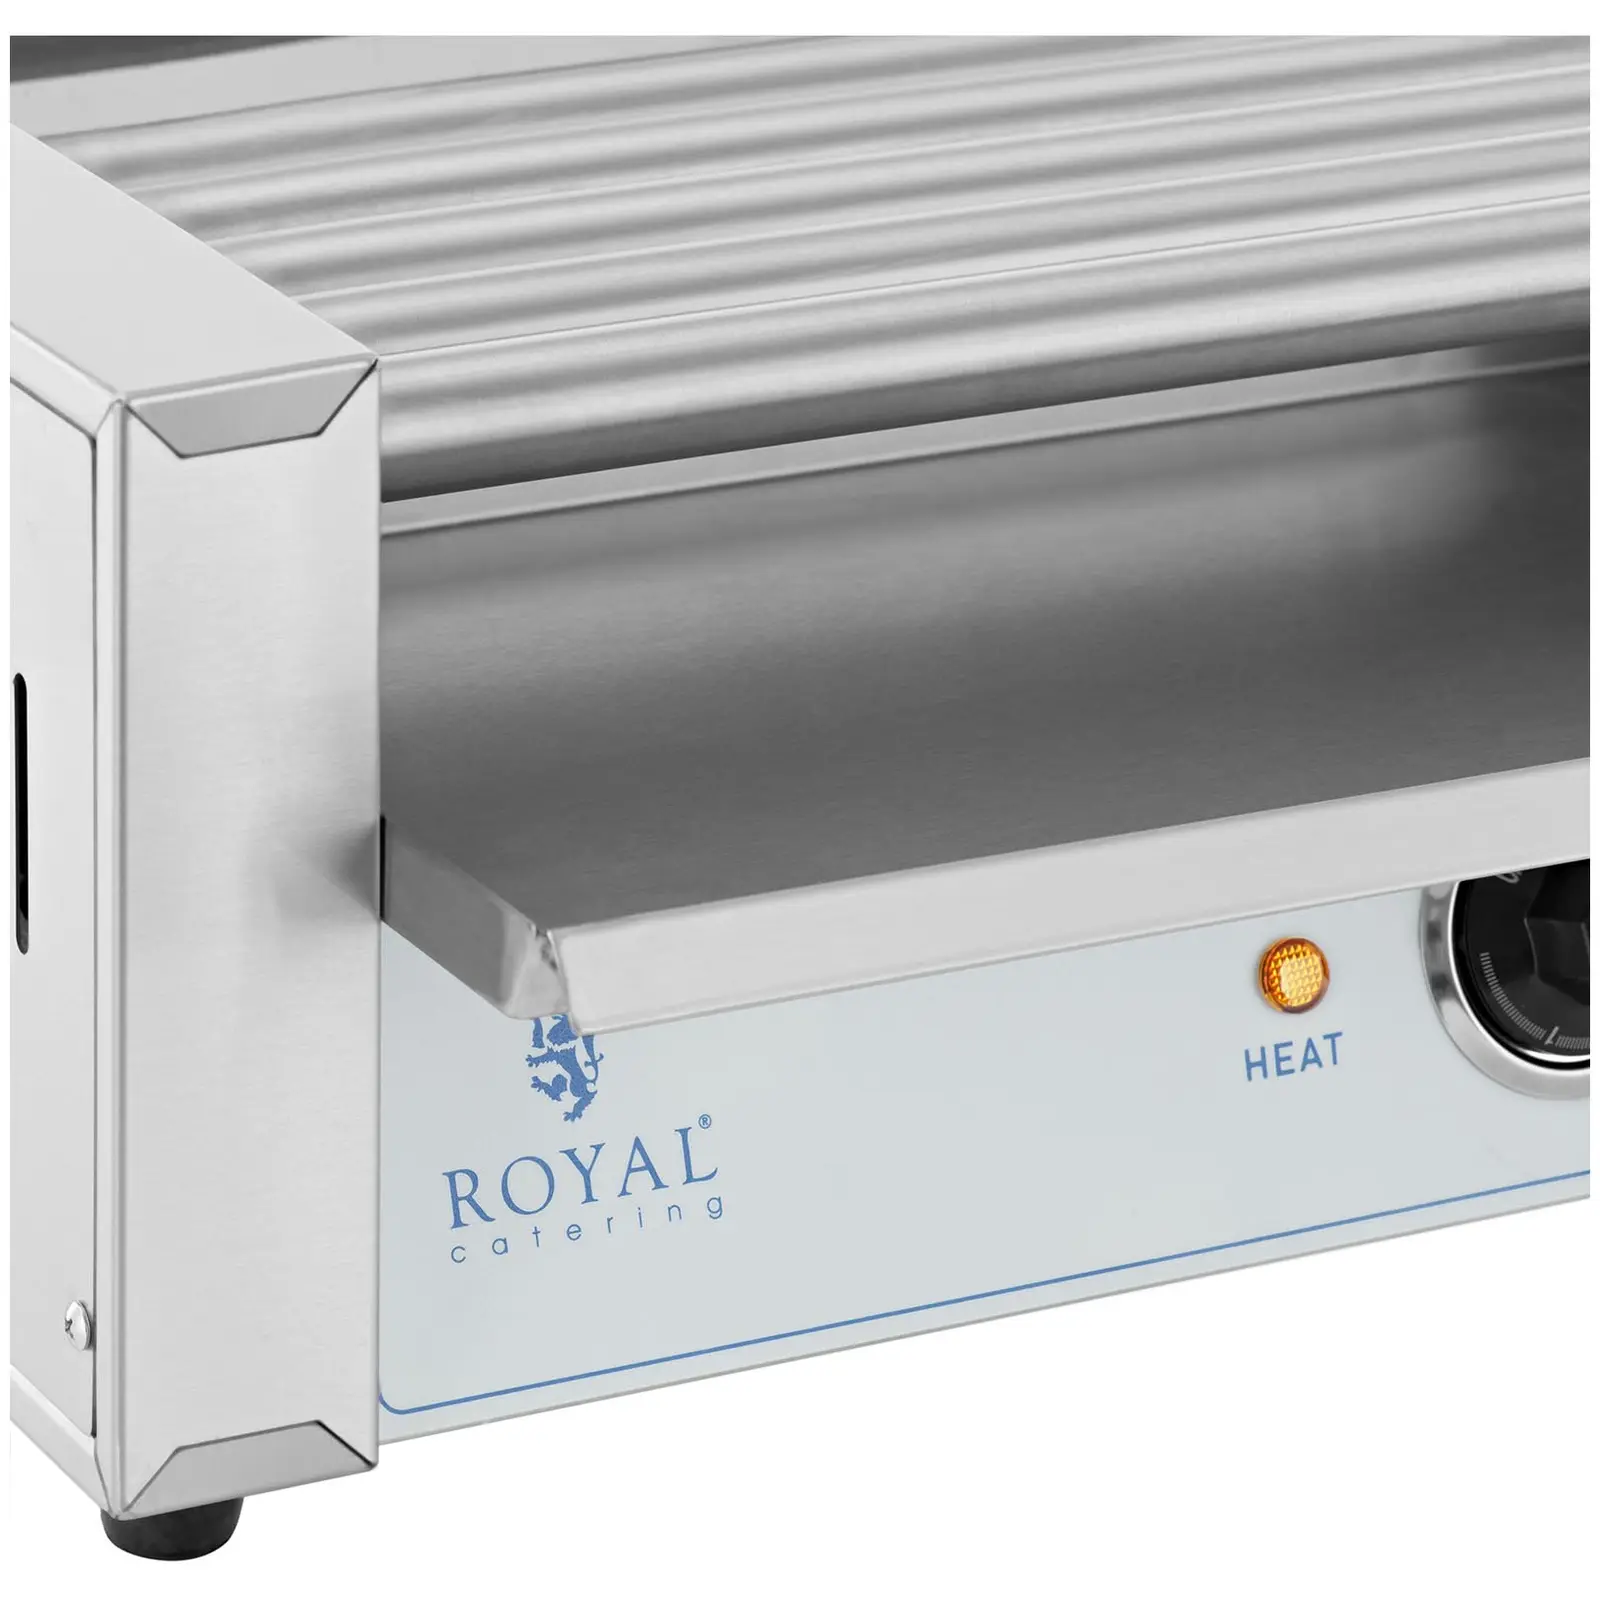 Hot dog grill - 5 henger - Royal Catering - rozsdamentes acél